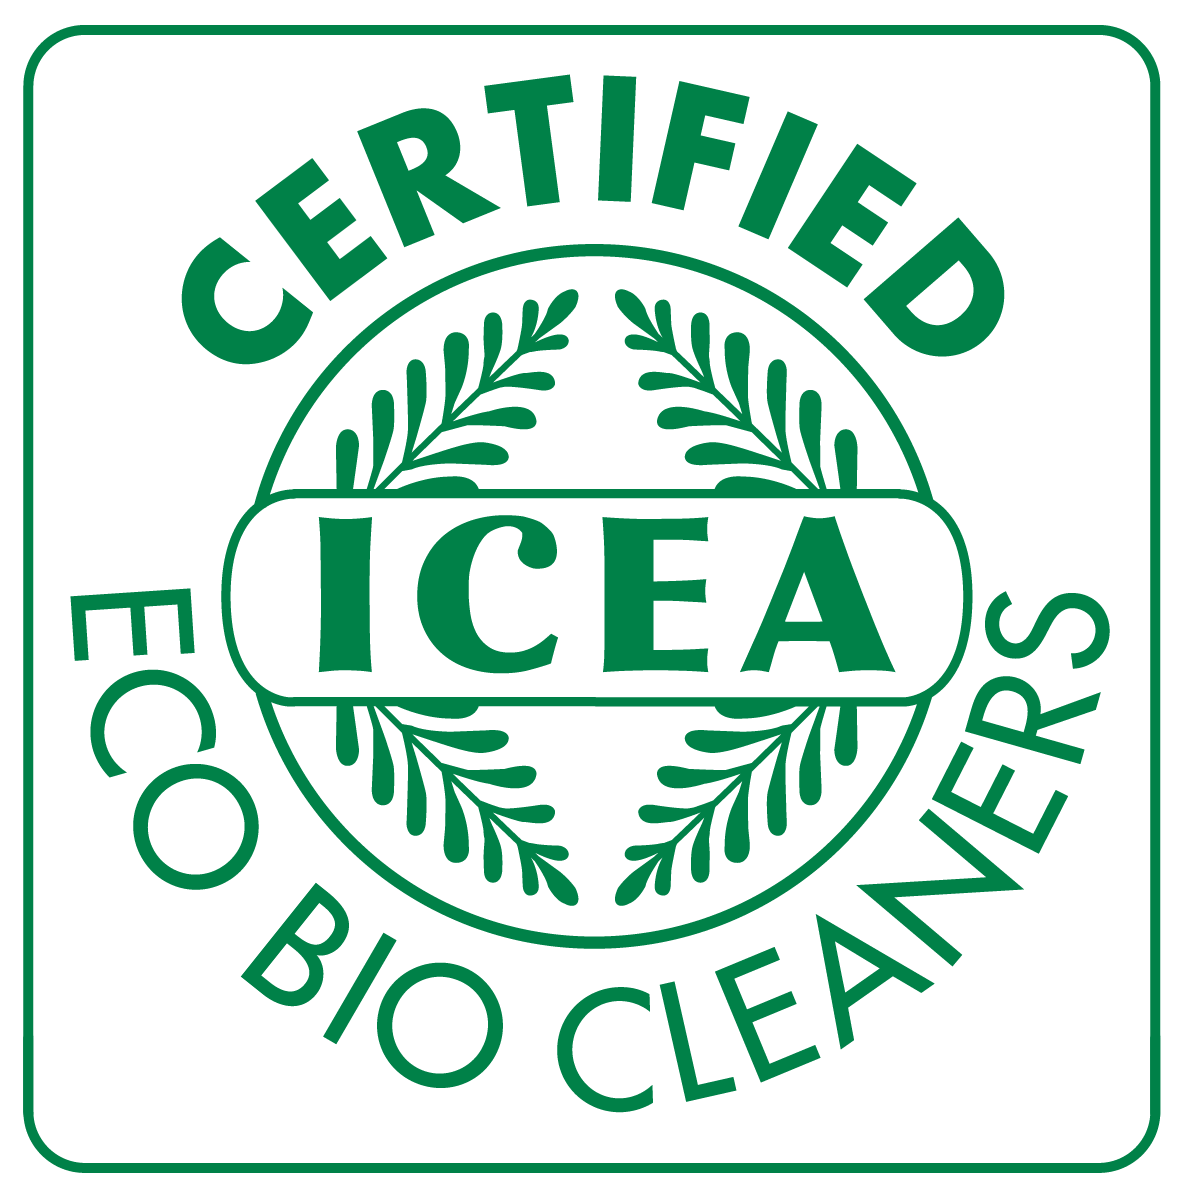 ICEA eco bio.png (96 KB)